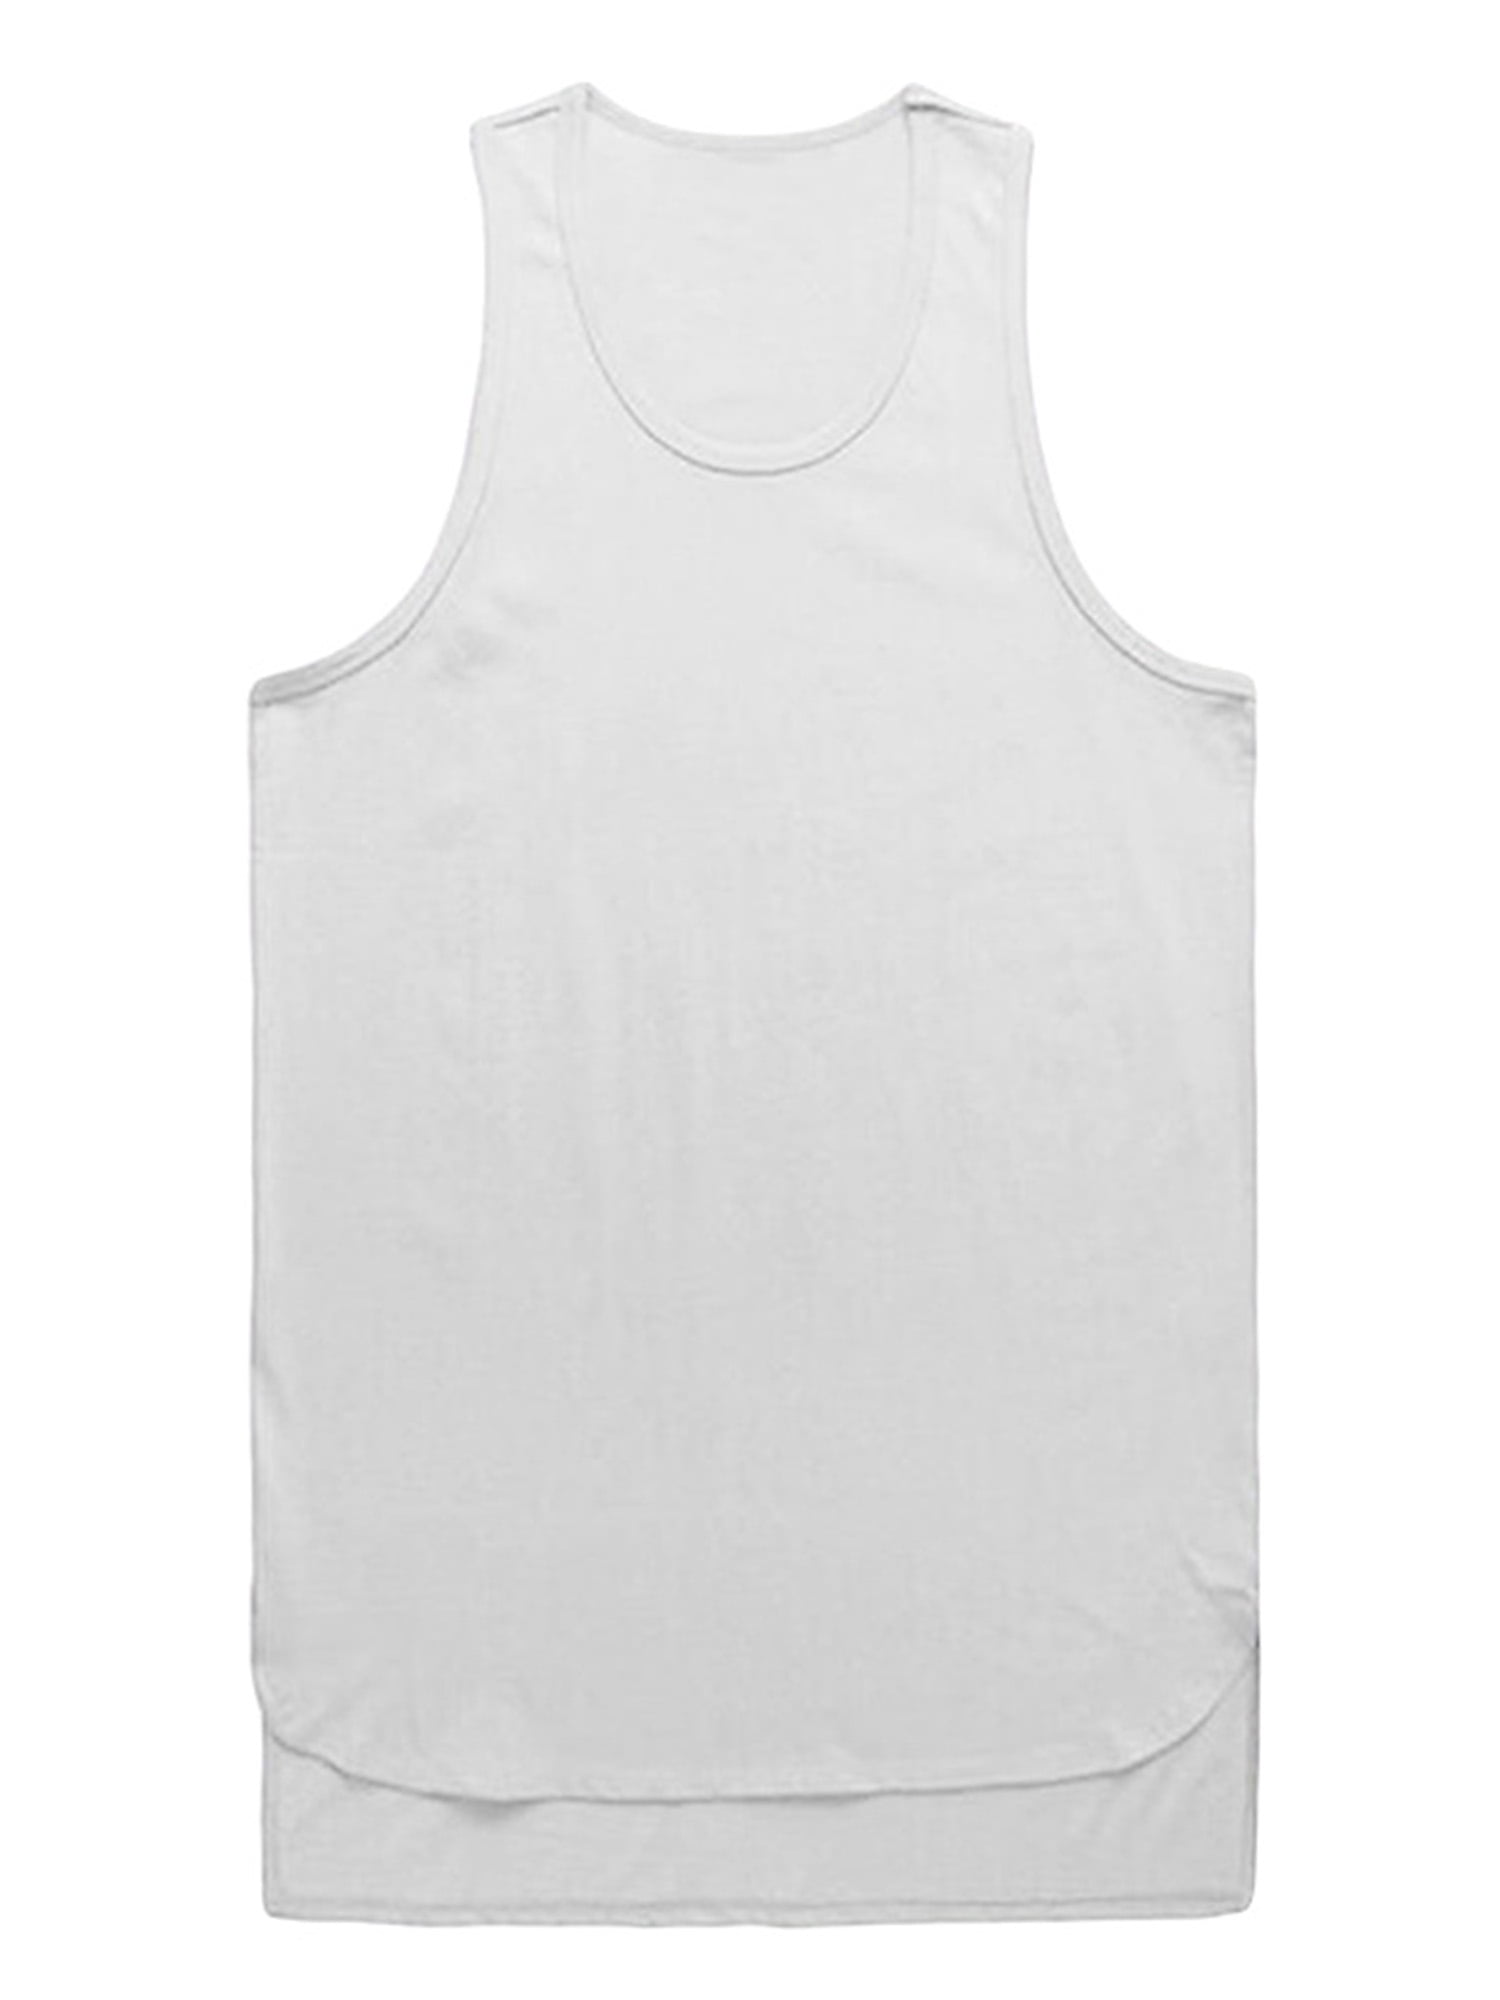 AOYOMO Mens Cotton Sleeveless Sport Basic T-Shirt Tops Fitness Tight Tank Vest 